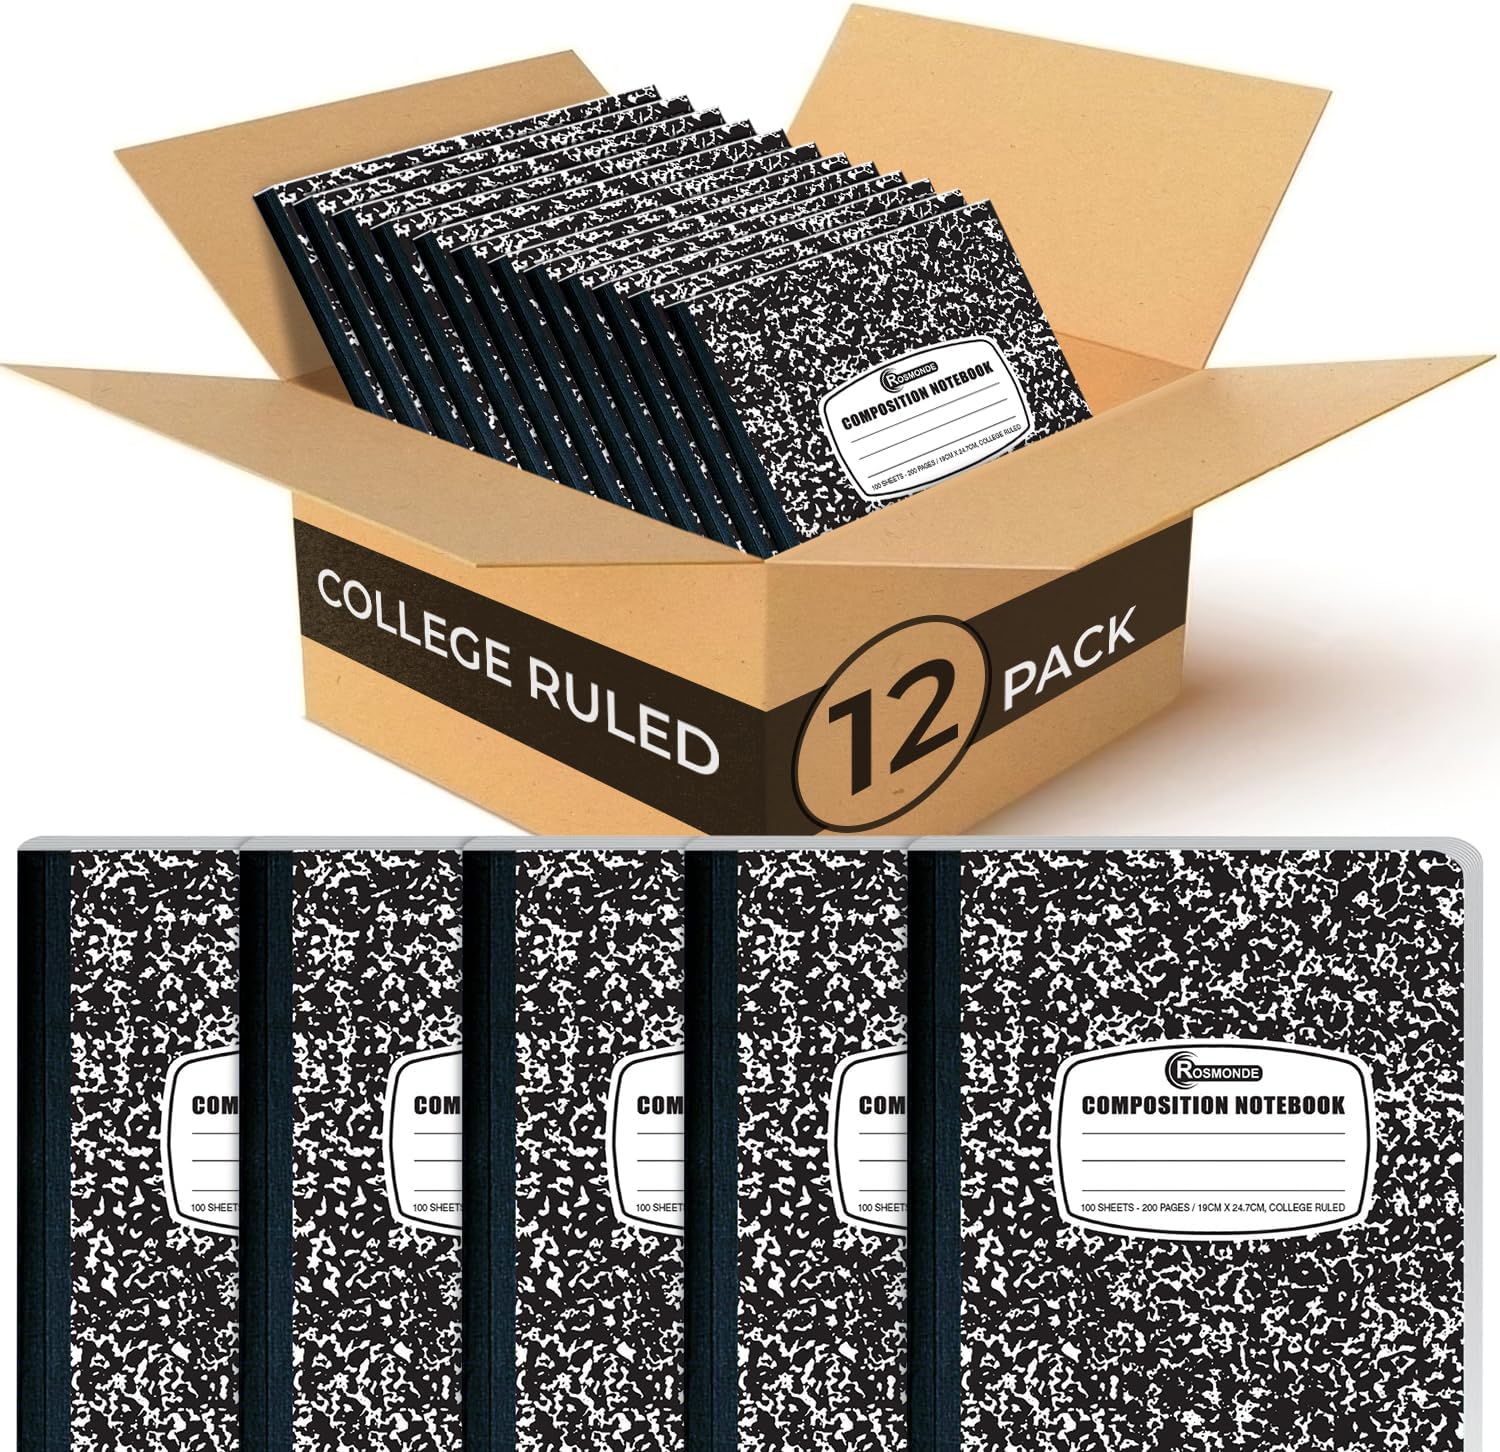 black+color+marble+bulk+12+pack+composition+notebooks+supplier+united+states+R_R2_college_blk_12pack+R2_college_blk_12pack